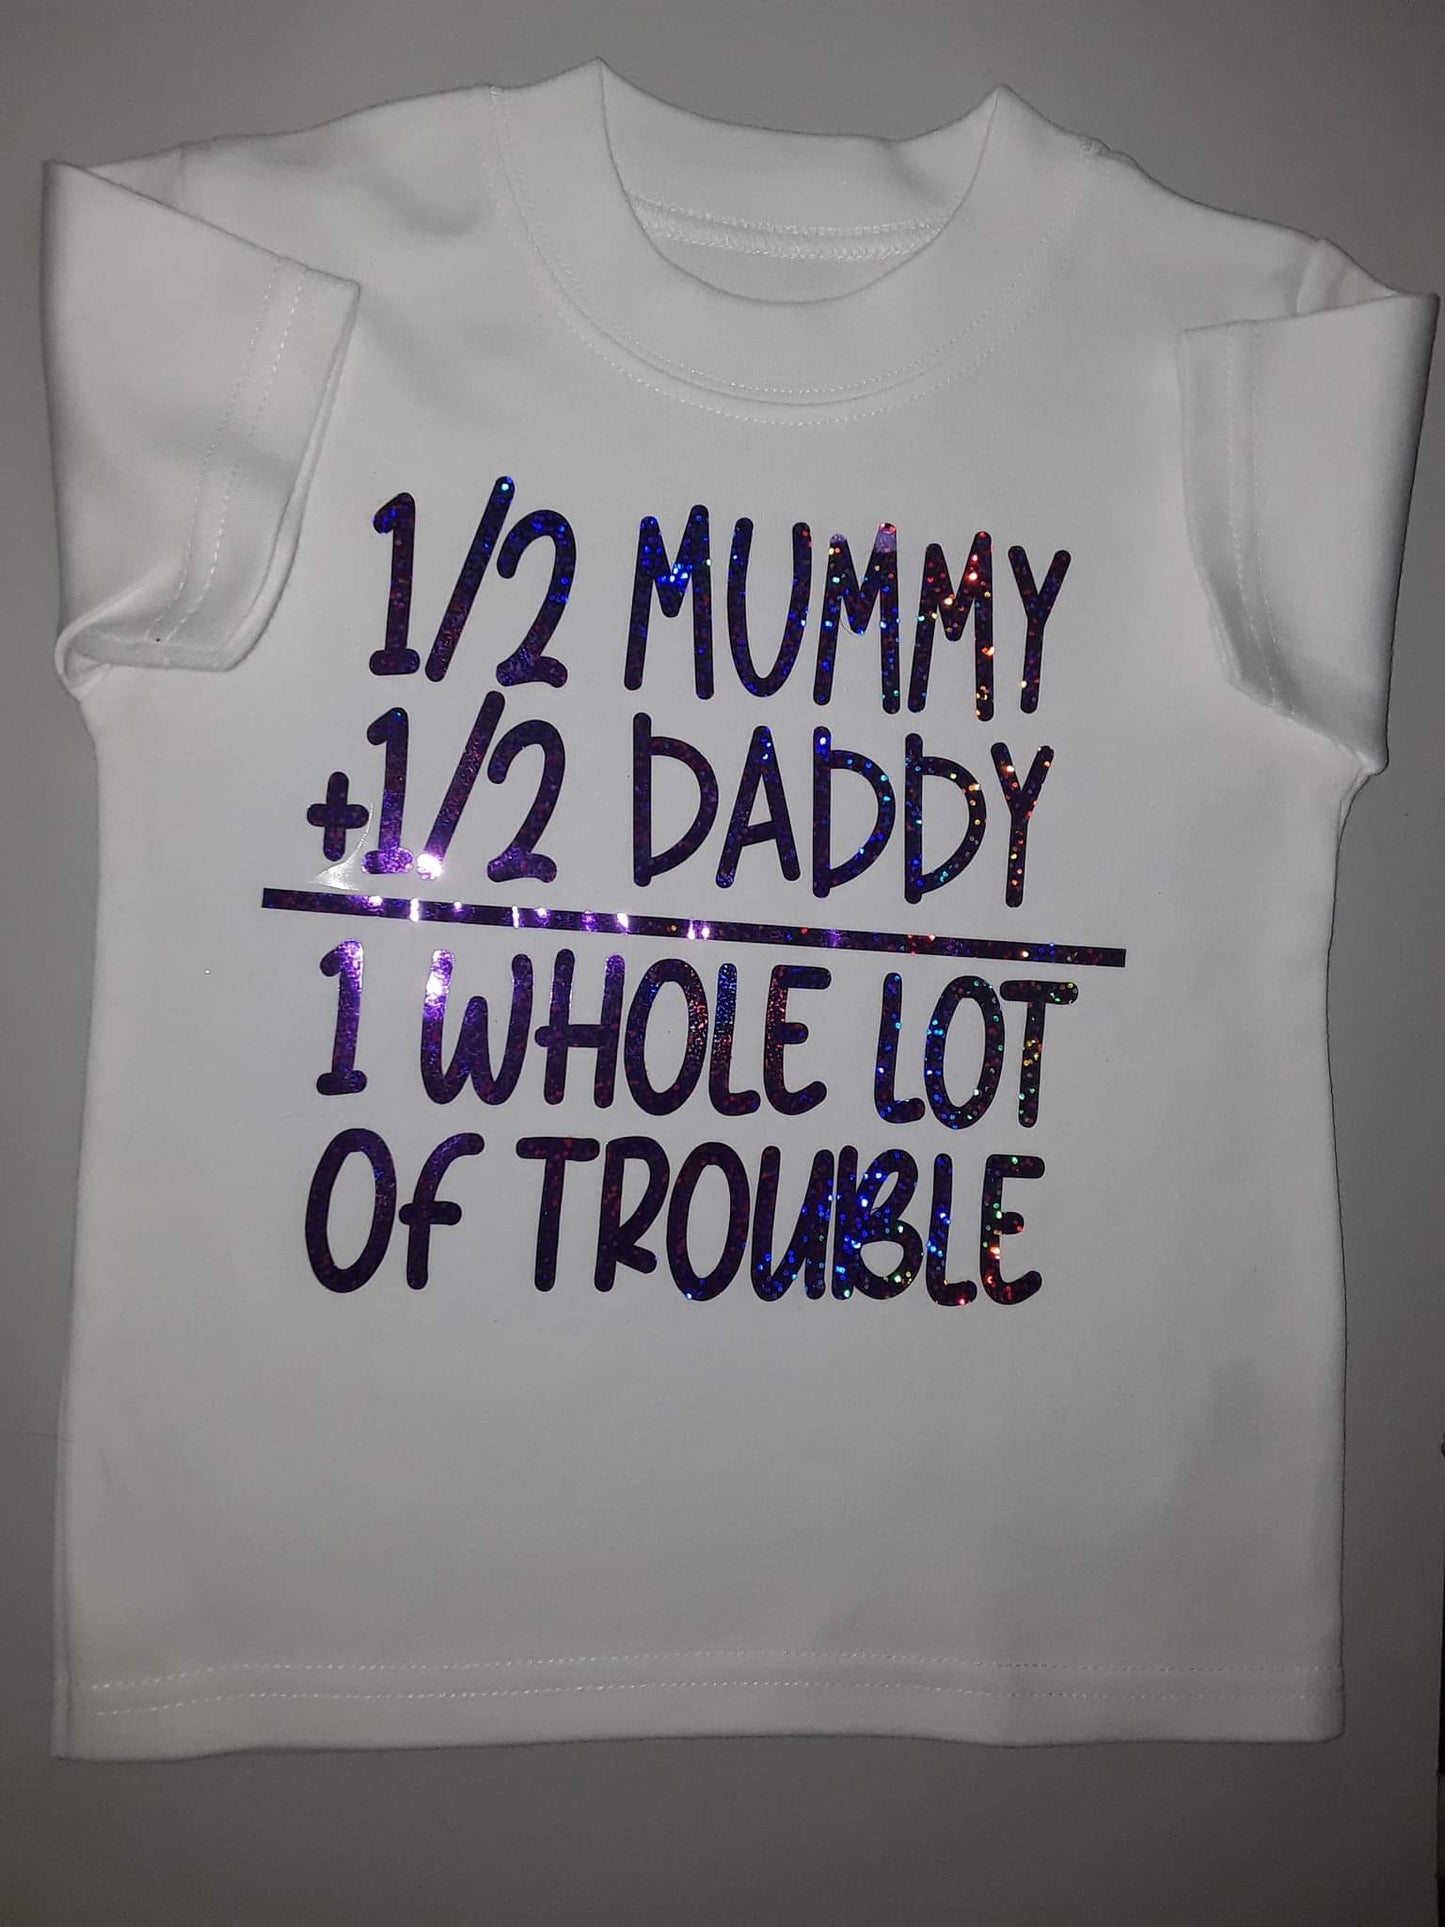 Daddy and mummy t shirts